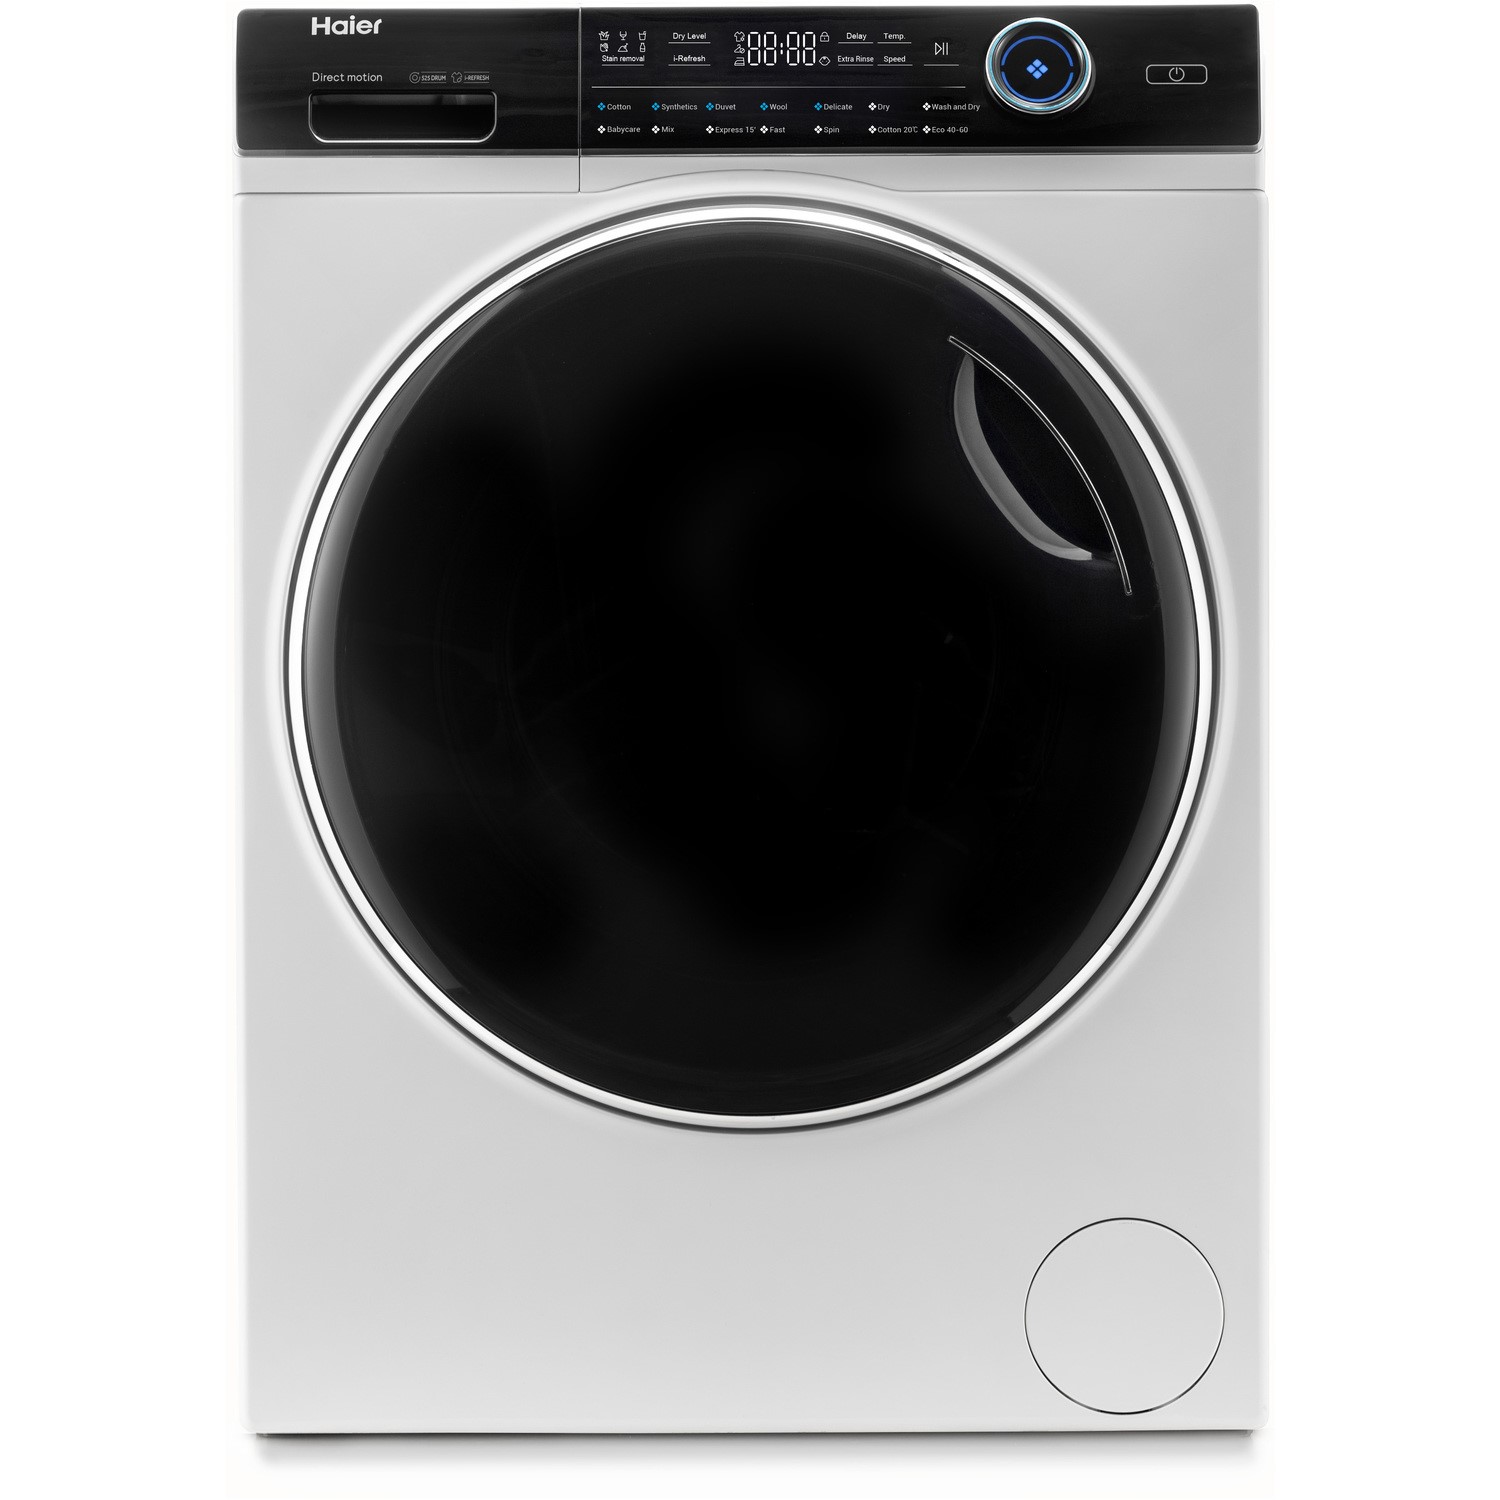 Haier i-Pro Series 7 HWD80-B14979 8kg Washer Dryer